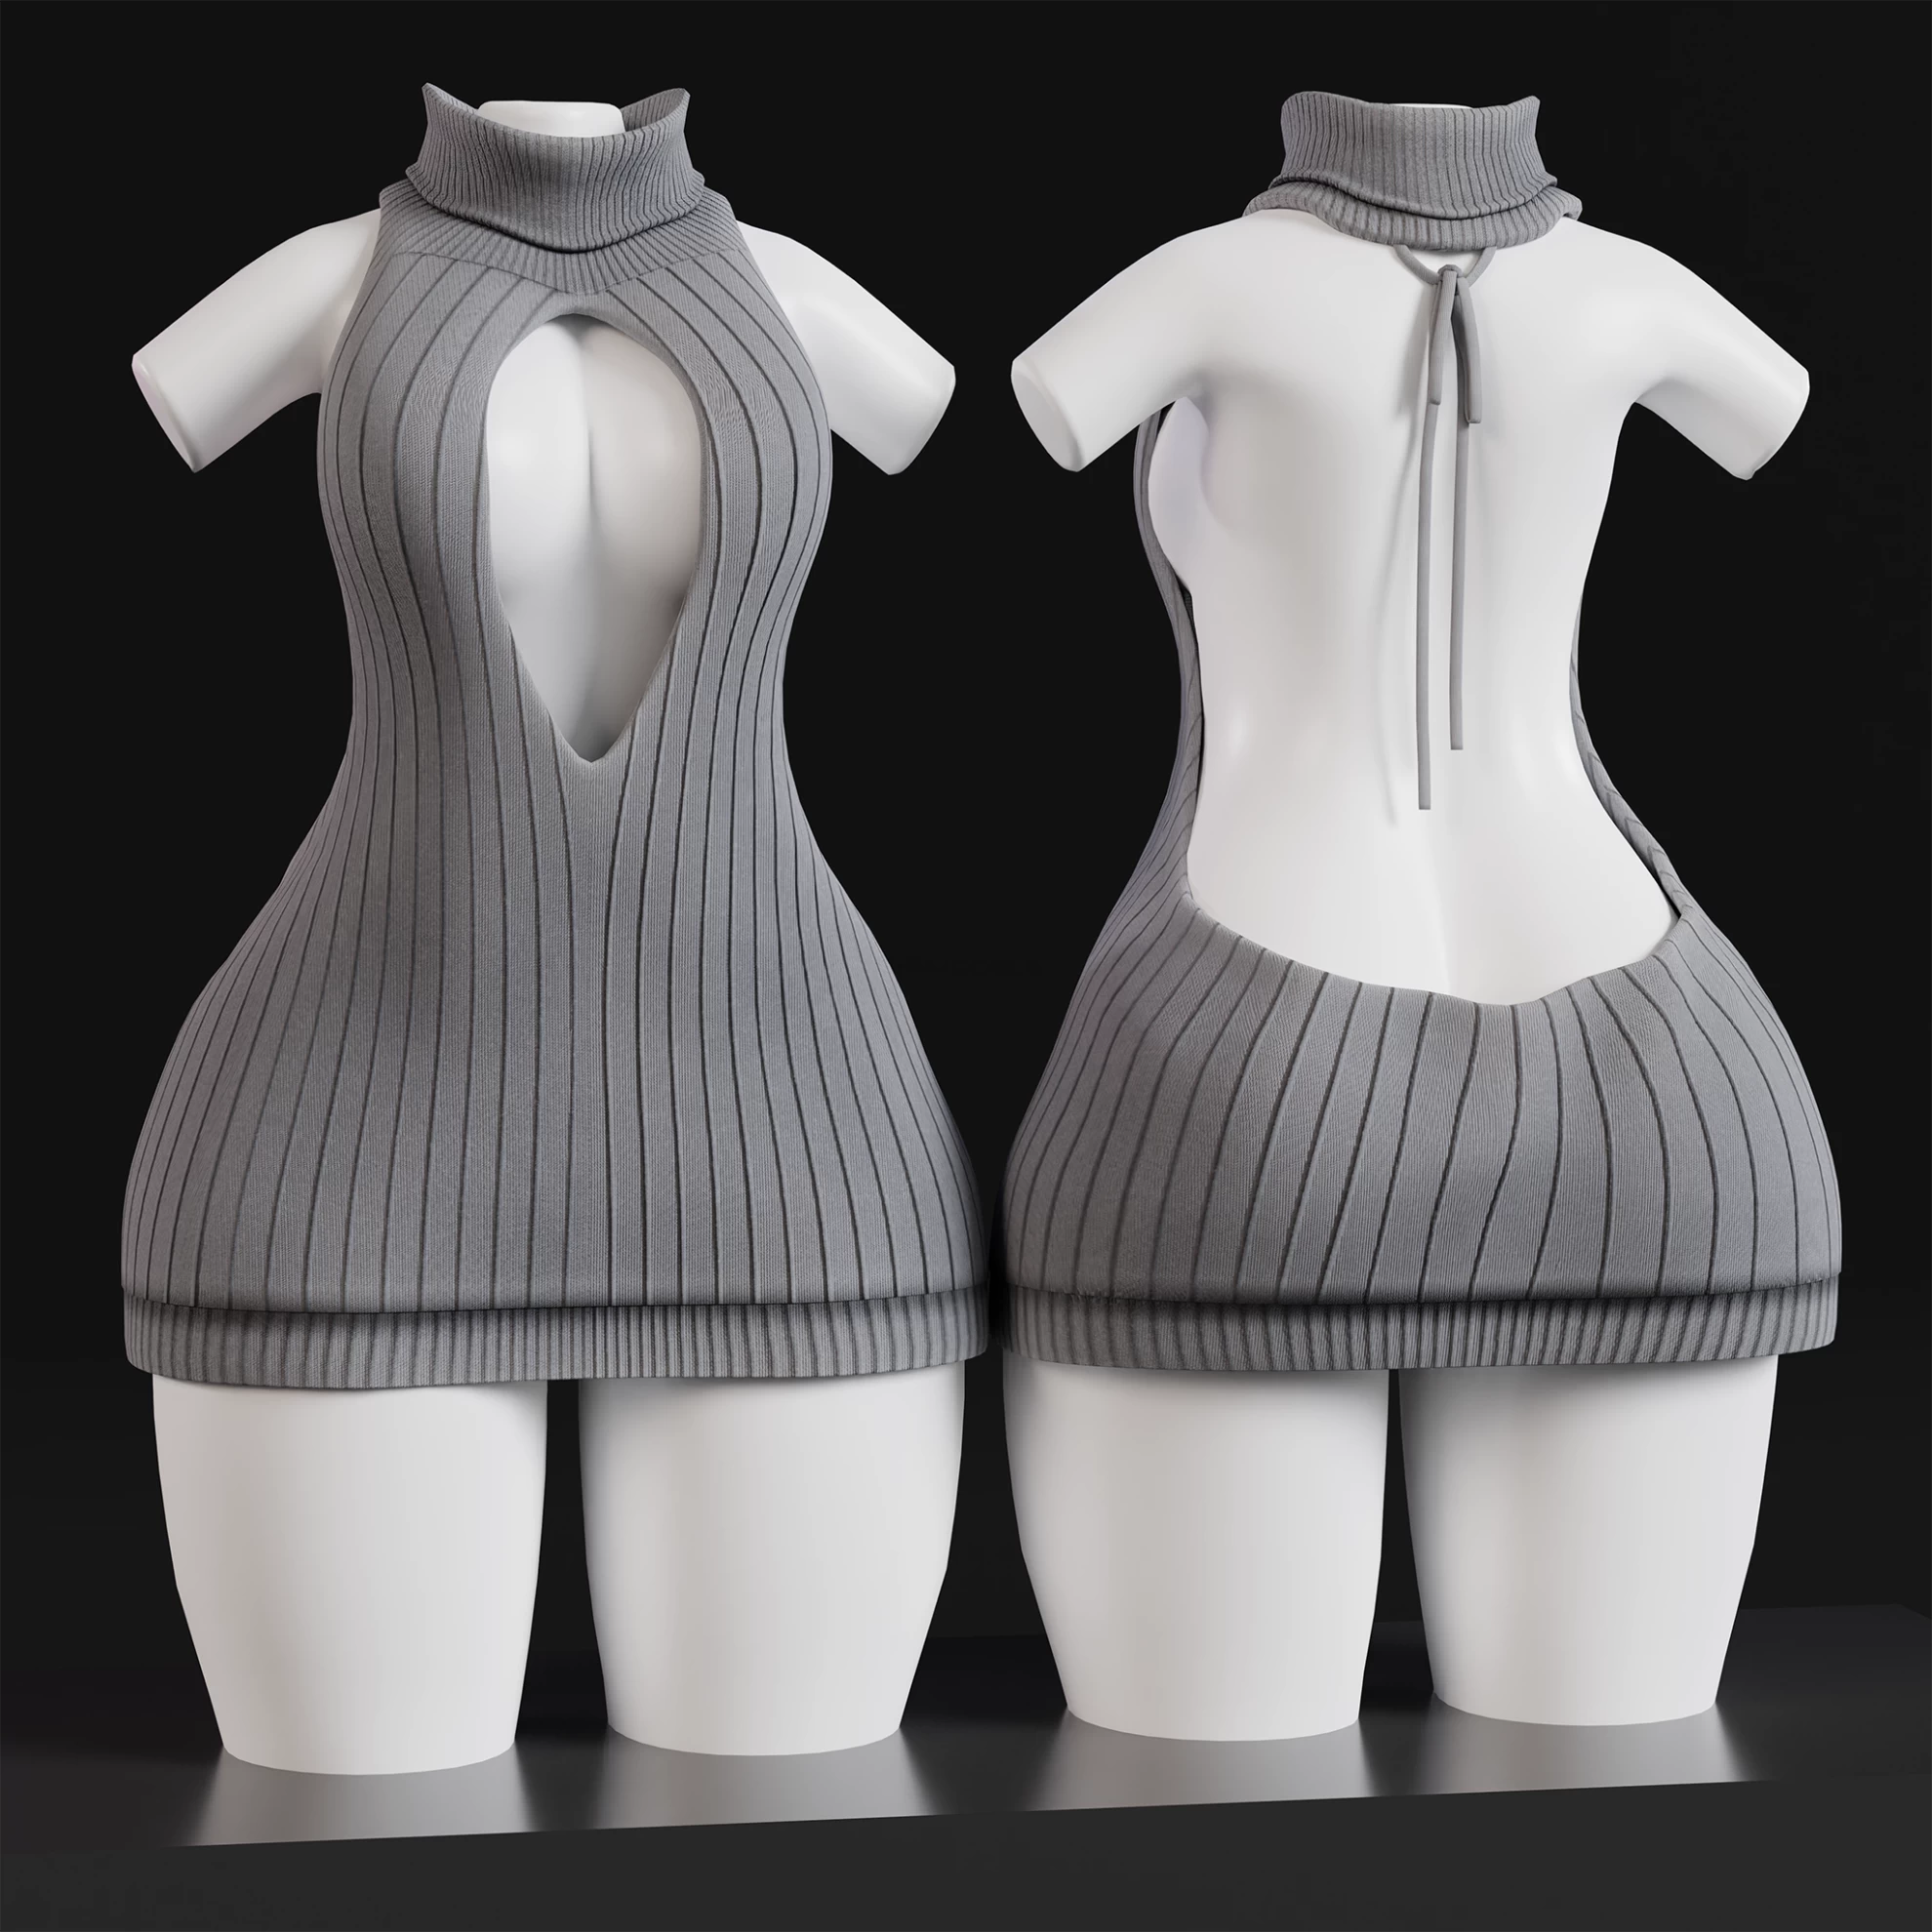 Virgin Killer Sweater Vrmodels 3d Models For Vr Ar And Cg Projects 